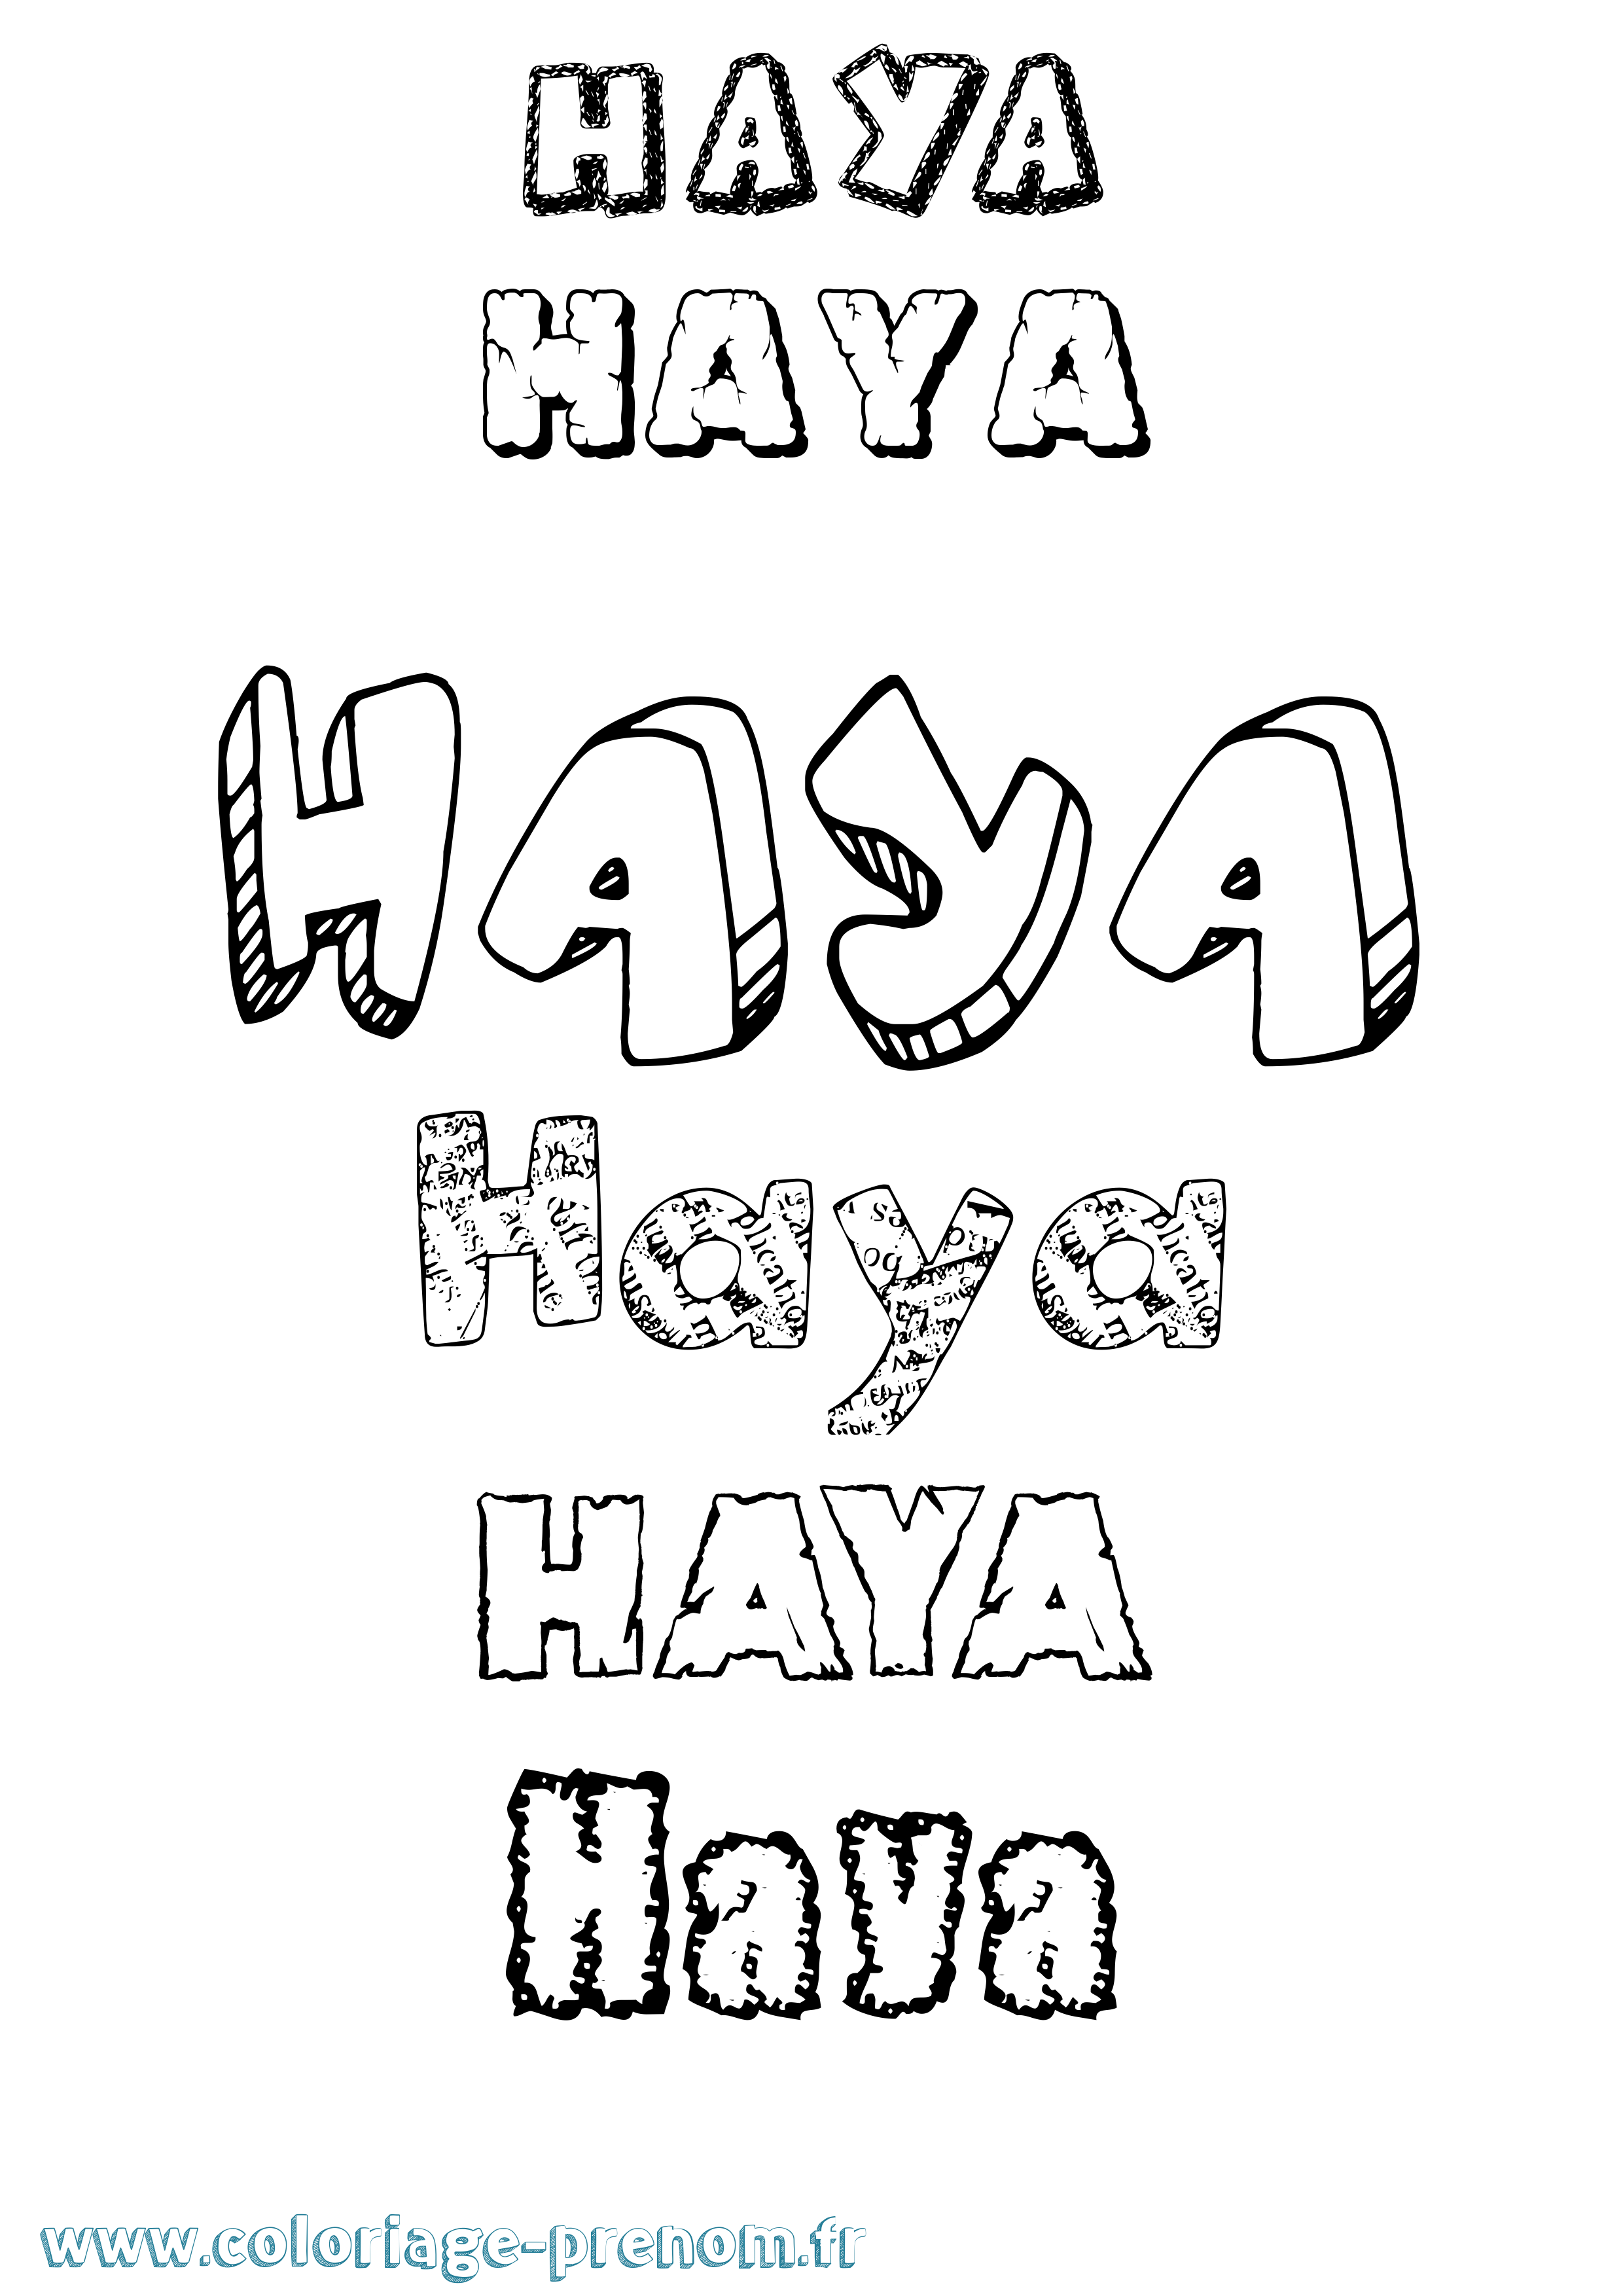 Coloriage prénom Haya